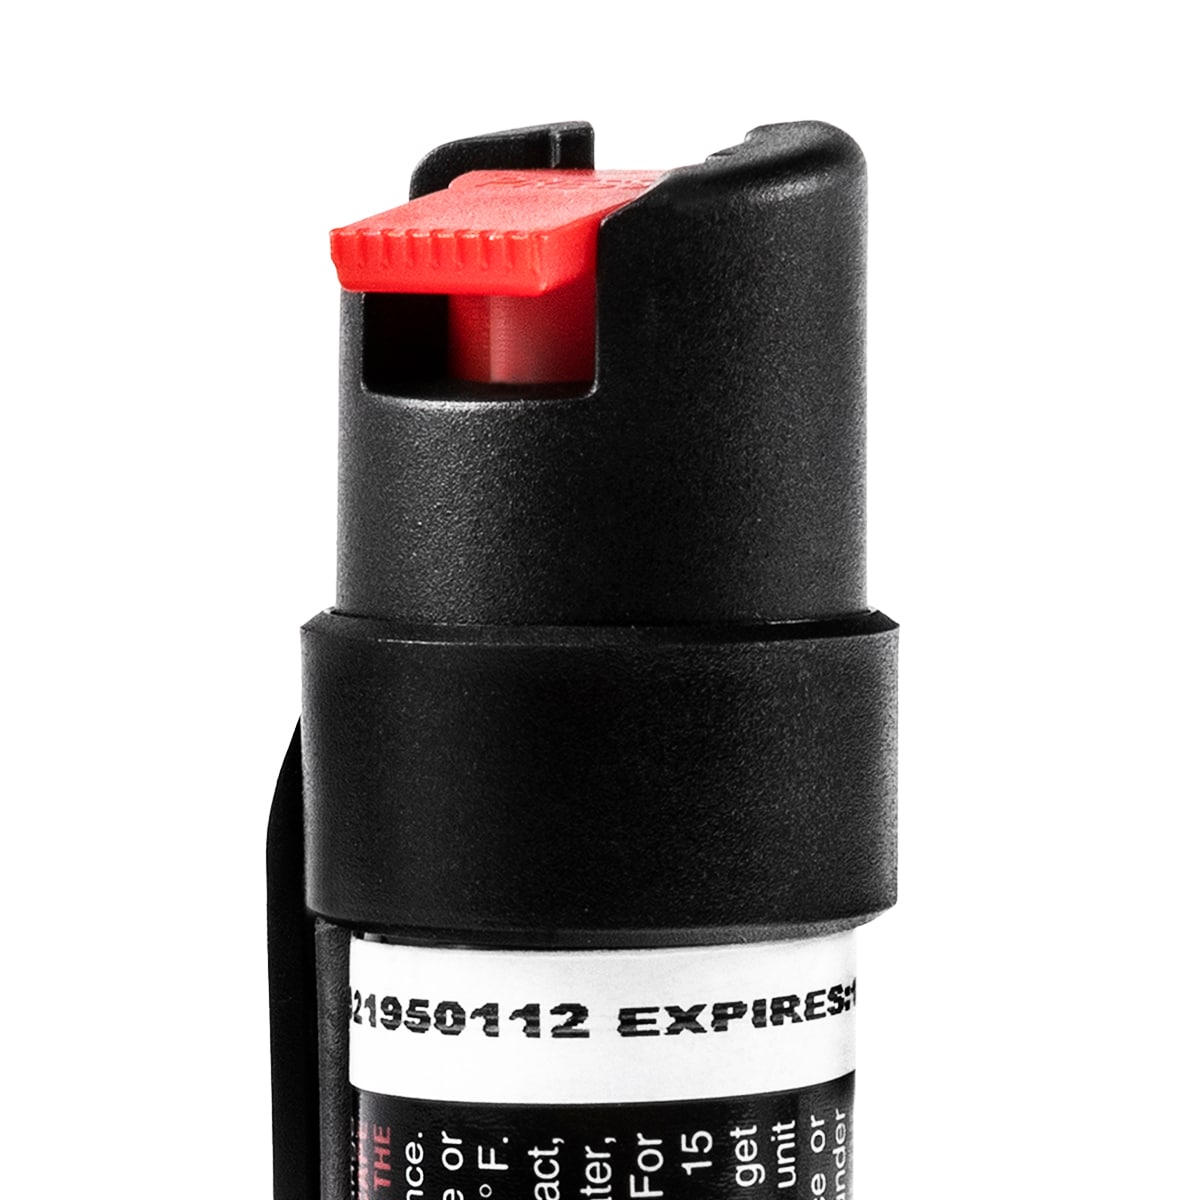 Gaz pieprzowy Ruger Pocket Unit 22 ml - żel